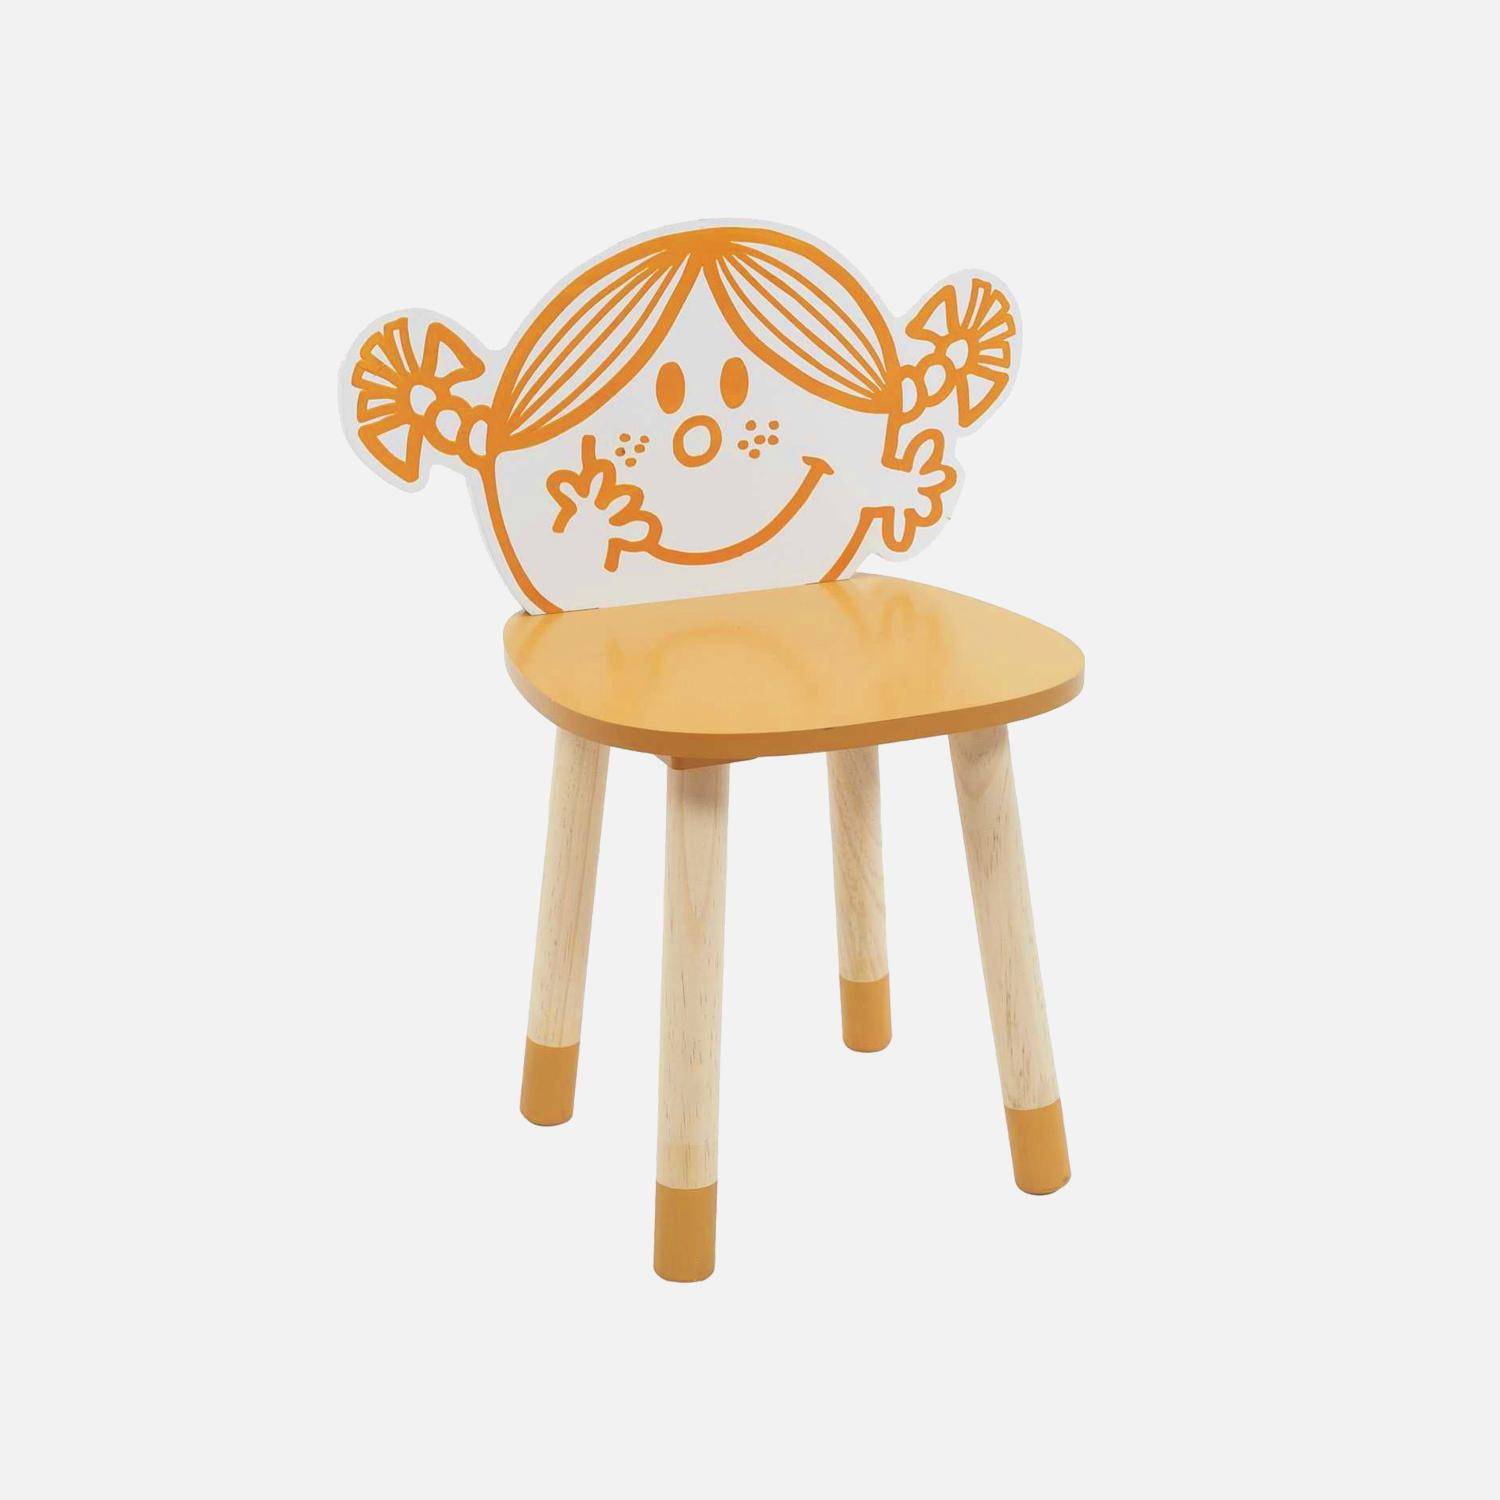 Set of 2 children's chairs, Mr. Men & Little Miss collection - Little Miss Sunshine Audrey, orange,sweeek,Photo4